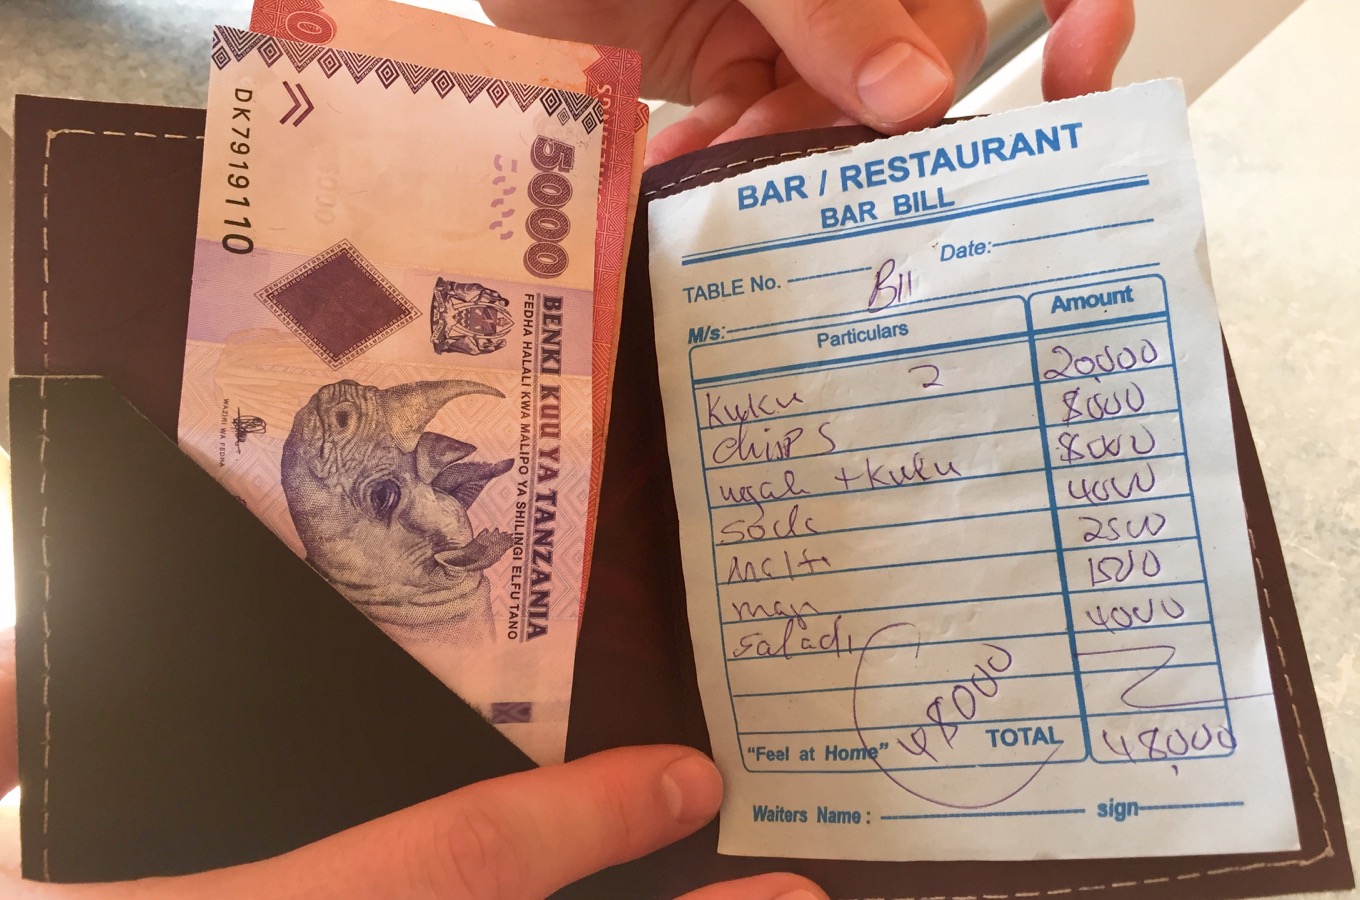 Check restaurant shilling bill